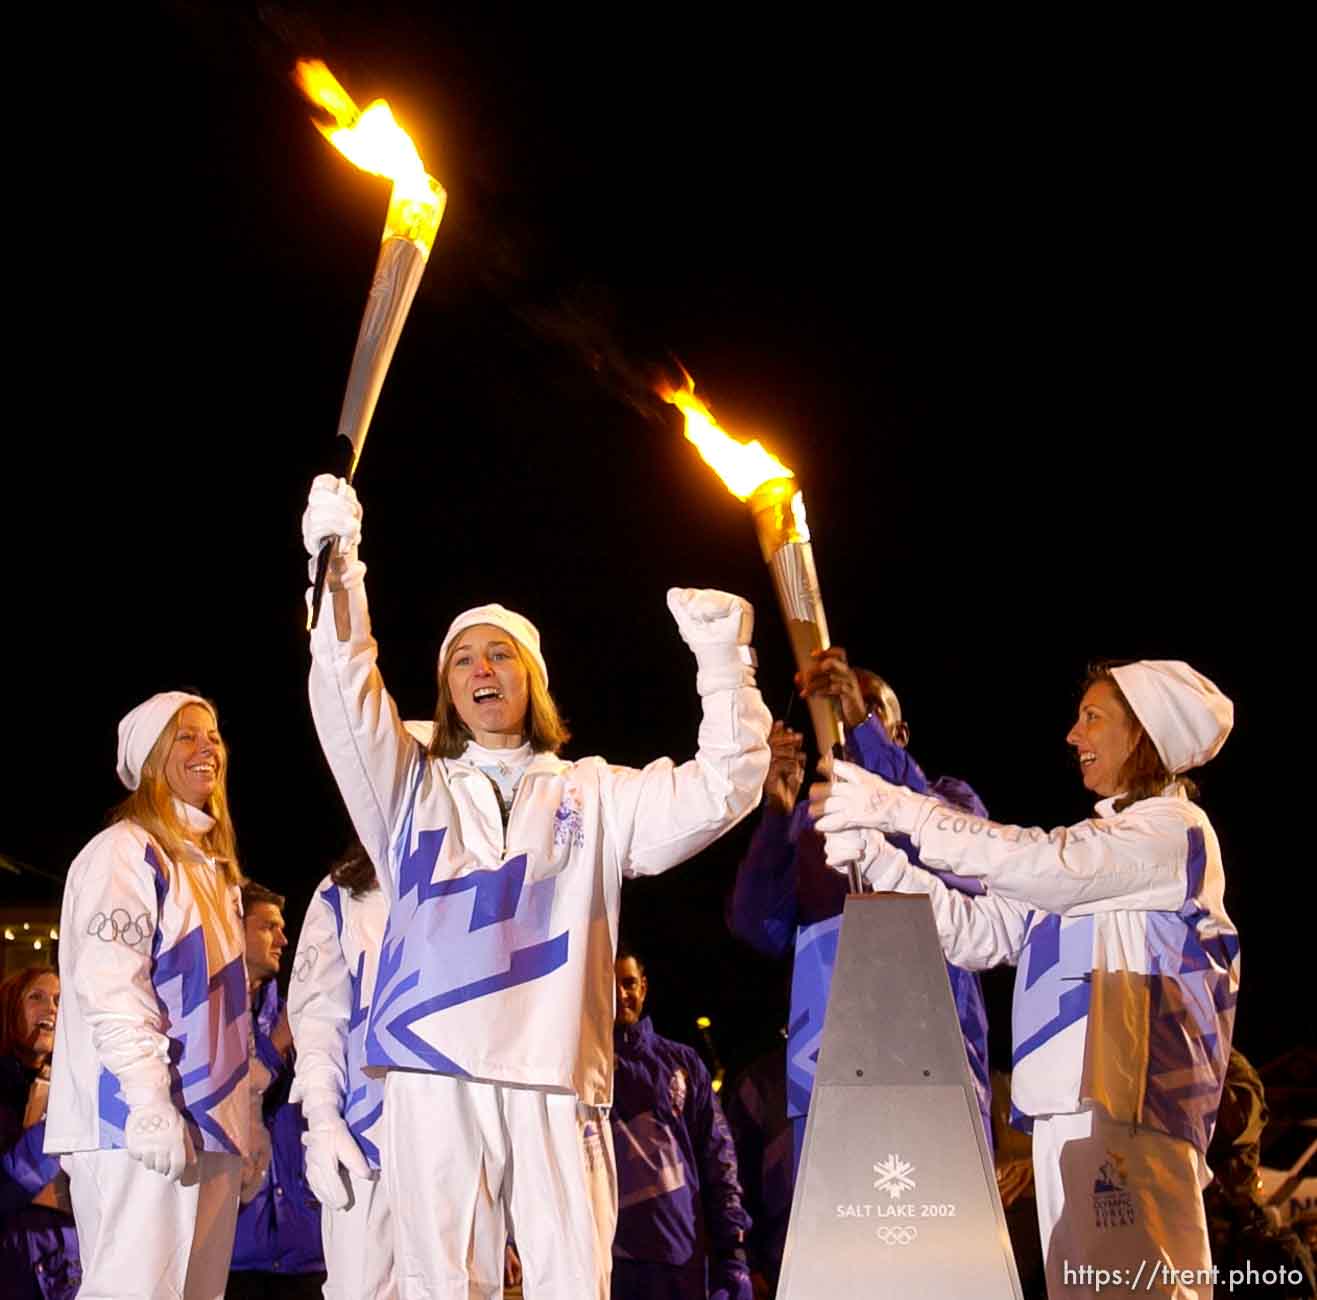 Olympic Torch in Philadelphia